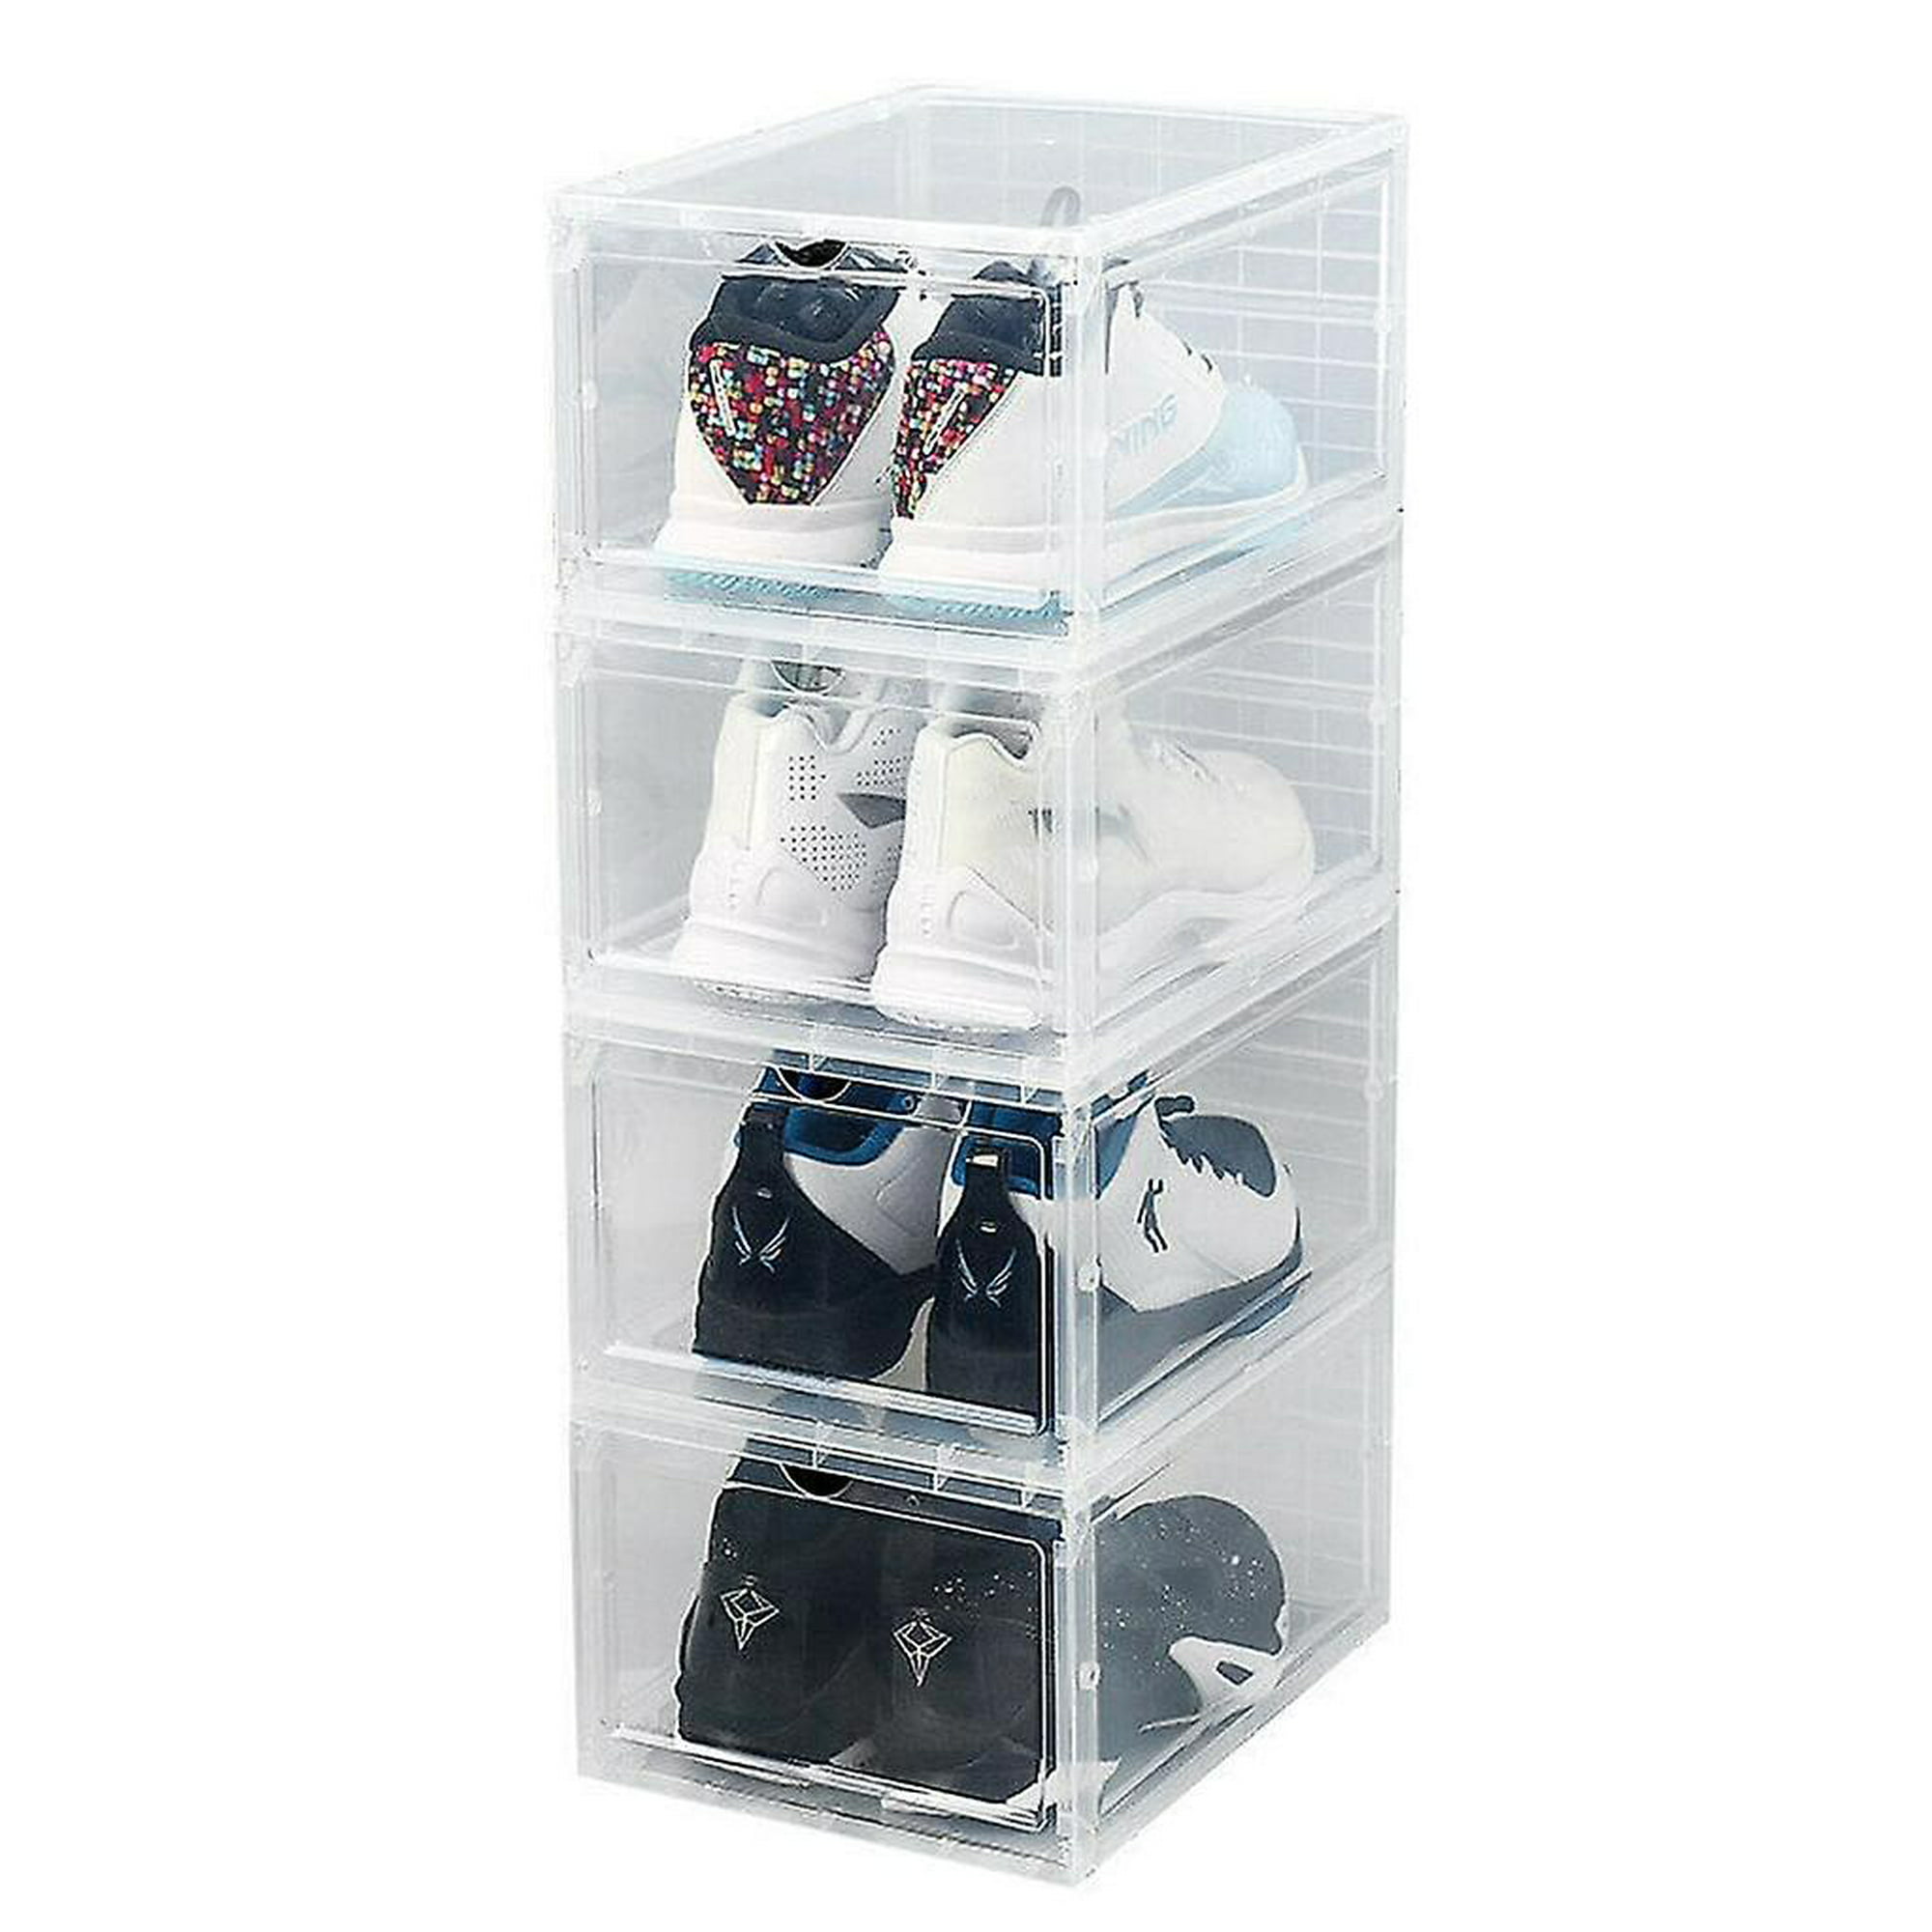 10X caja de zapatos caja apilable de almacenamiento de zapatos